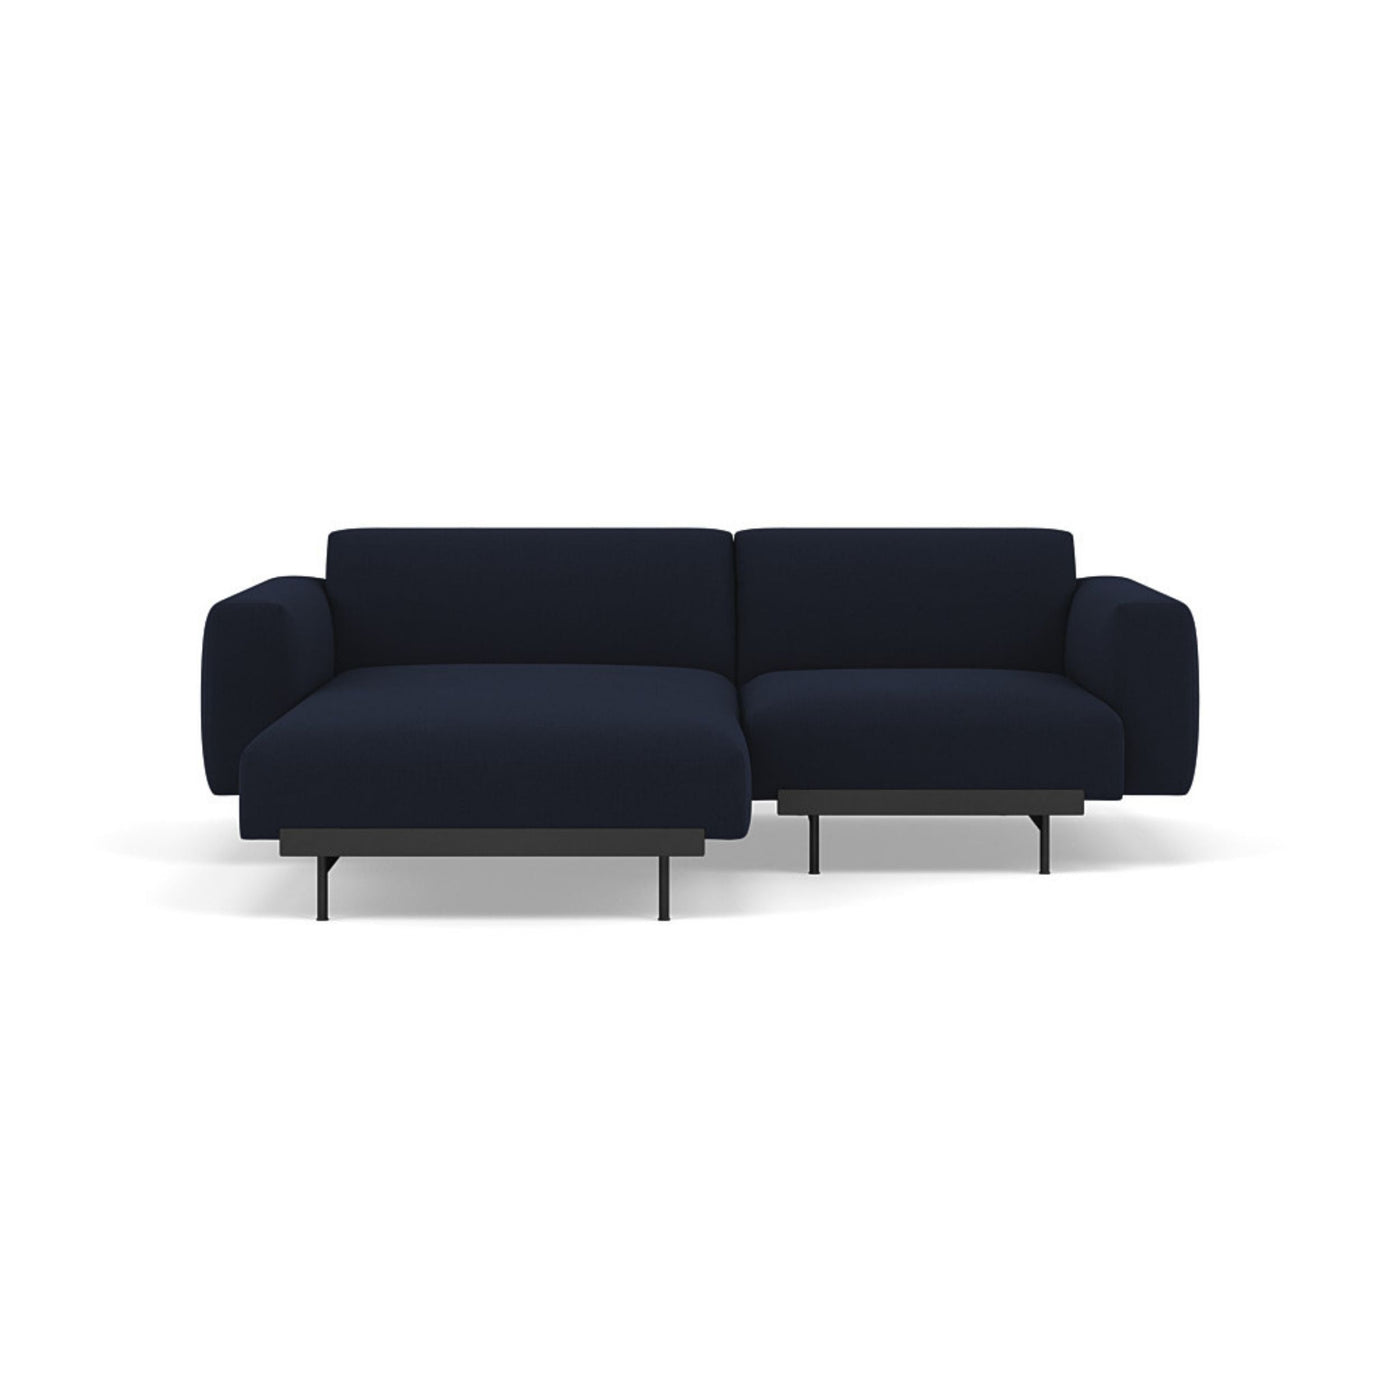 Muuto In Situ Modular 2 Seater Sofa, configuration 5 in vidar 554 fabric. Made to order from someday designs #colour_vidar-554